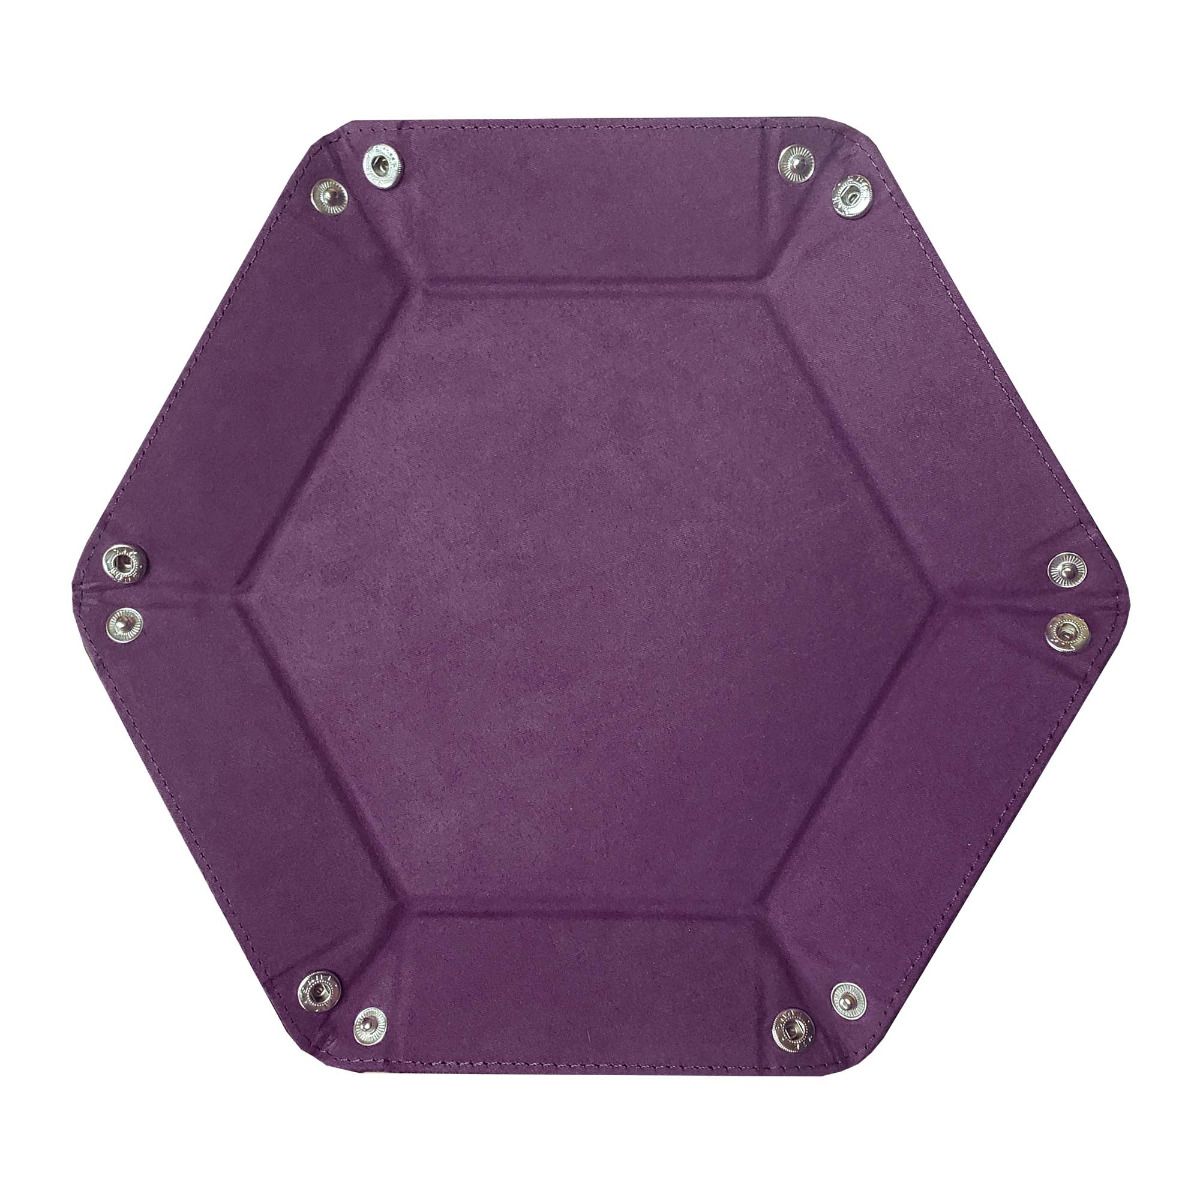 BCW Hexagon Dice Tray - Purple